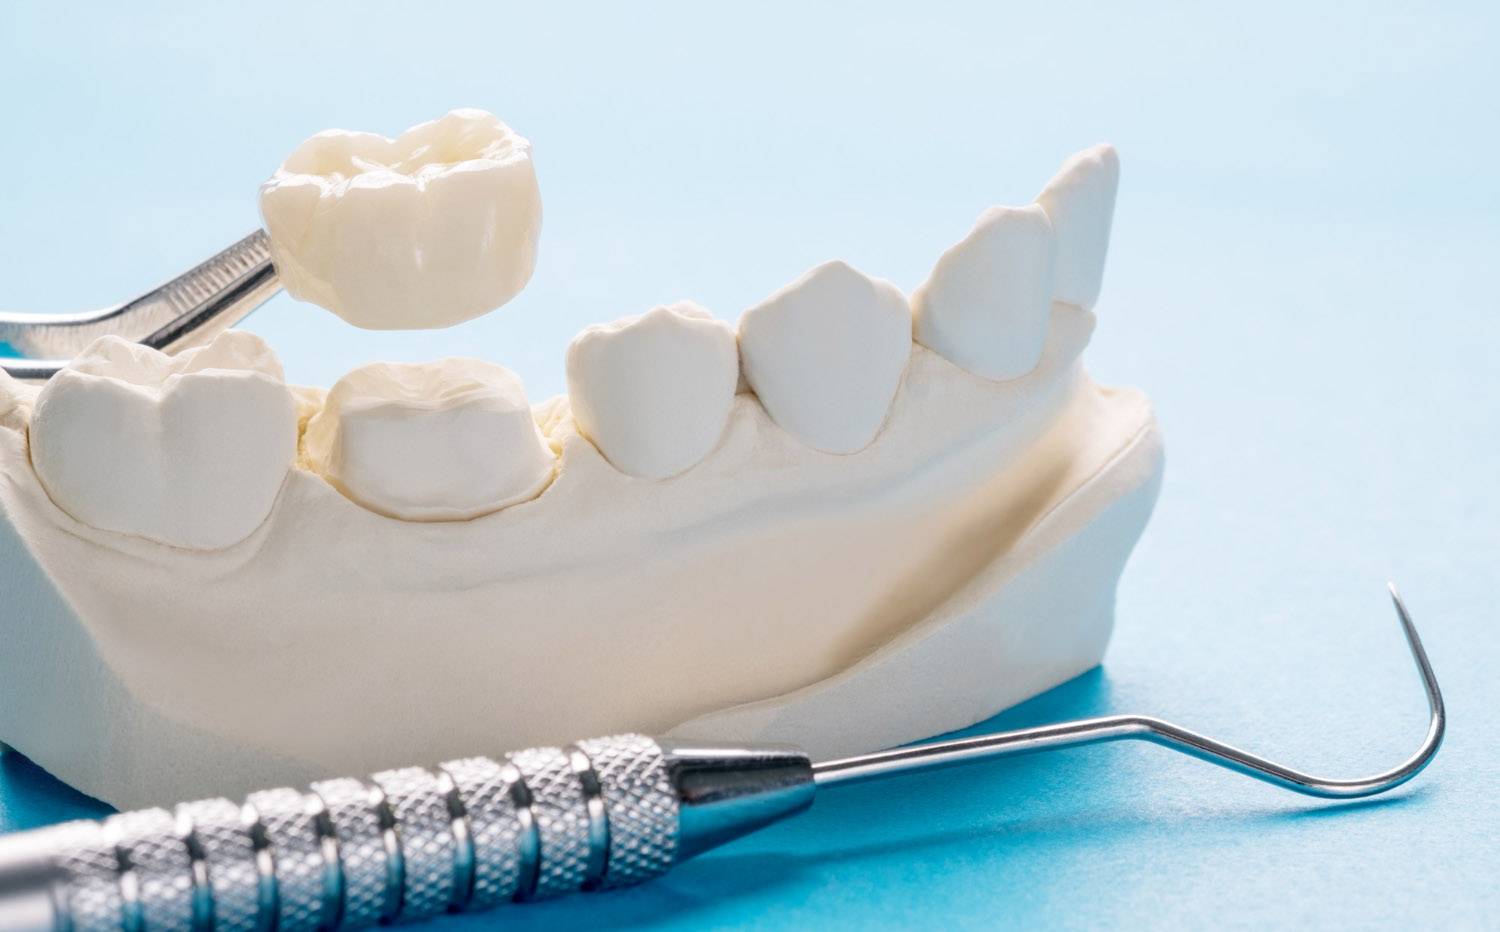 Dental Crowns Treatment